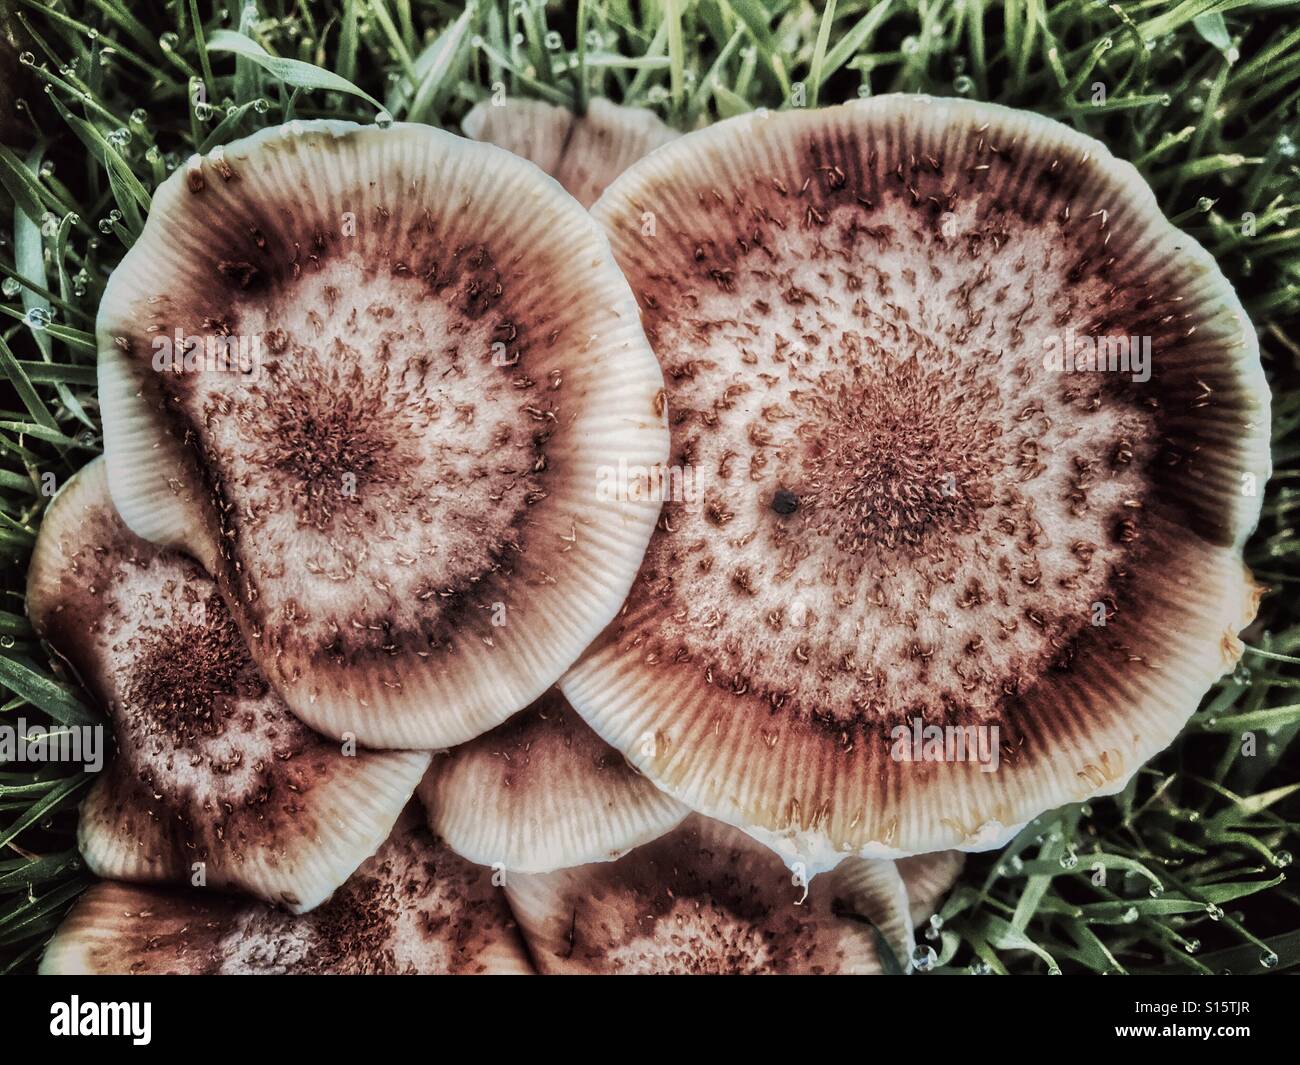 Patterns in Nature - Autumn fungi fruiting body group, circular caps, October Stock Photo